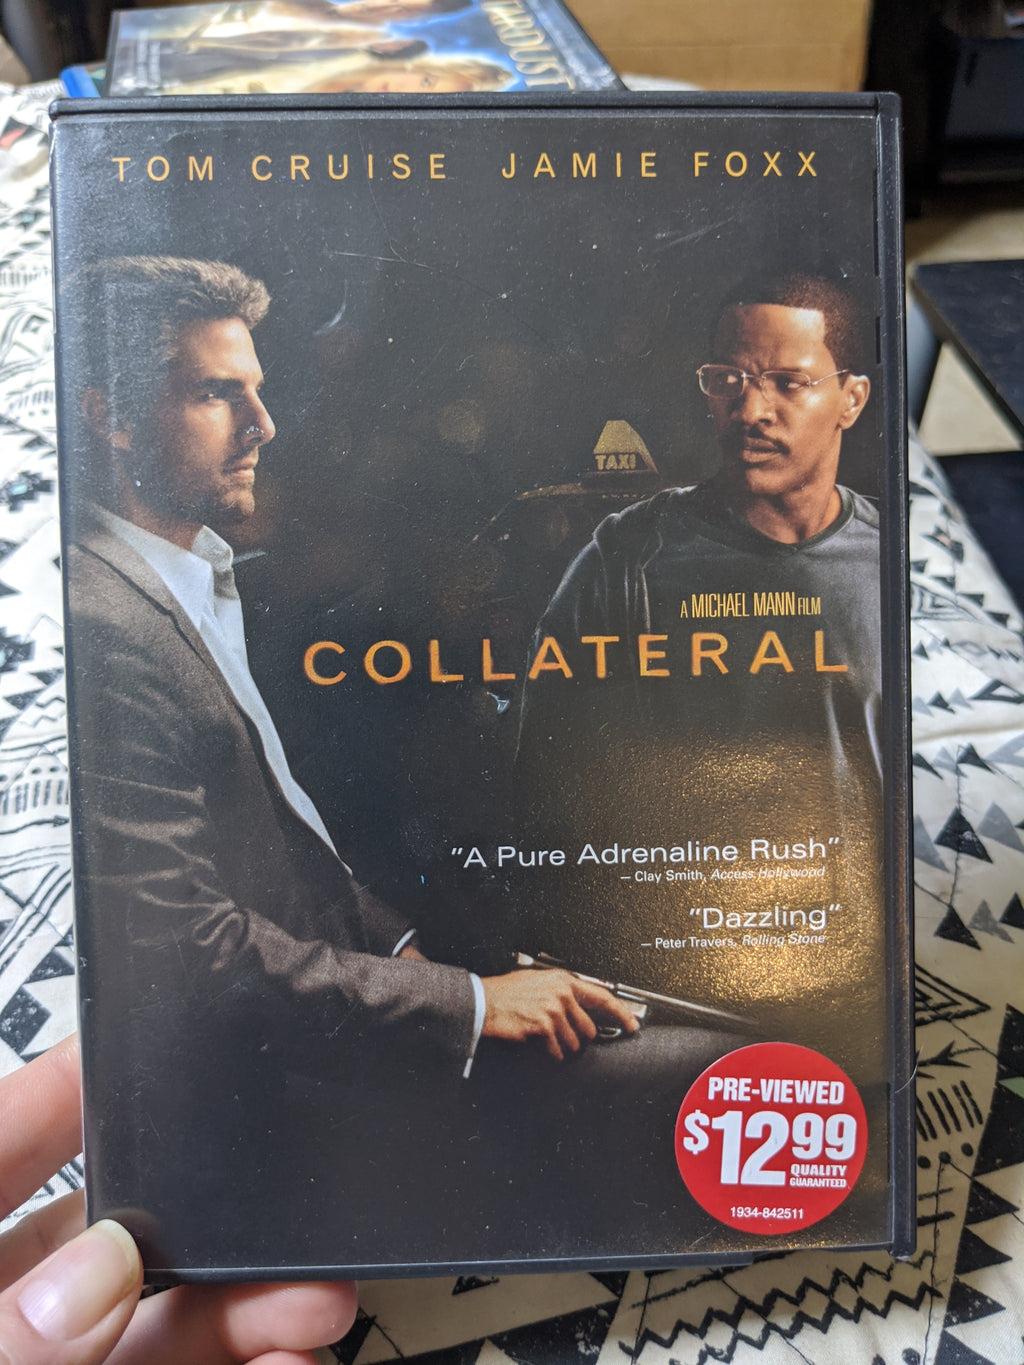 Collateral DVD - Tom Cruise - Jamie Foxx - 2 DVD Set Version